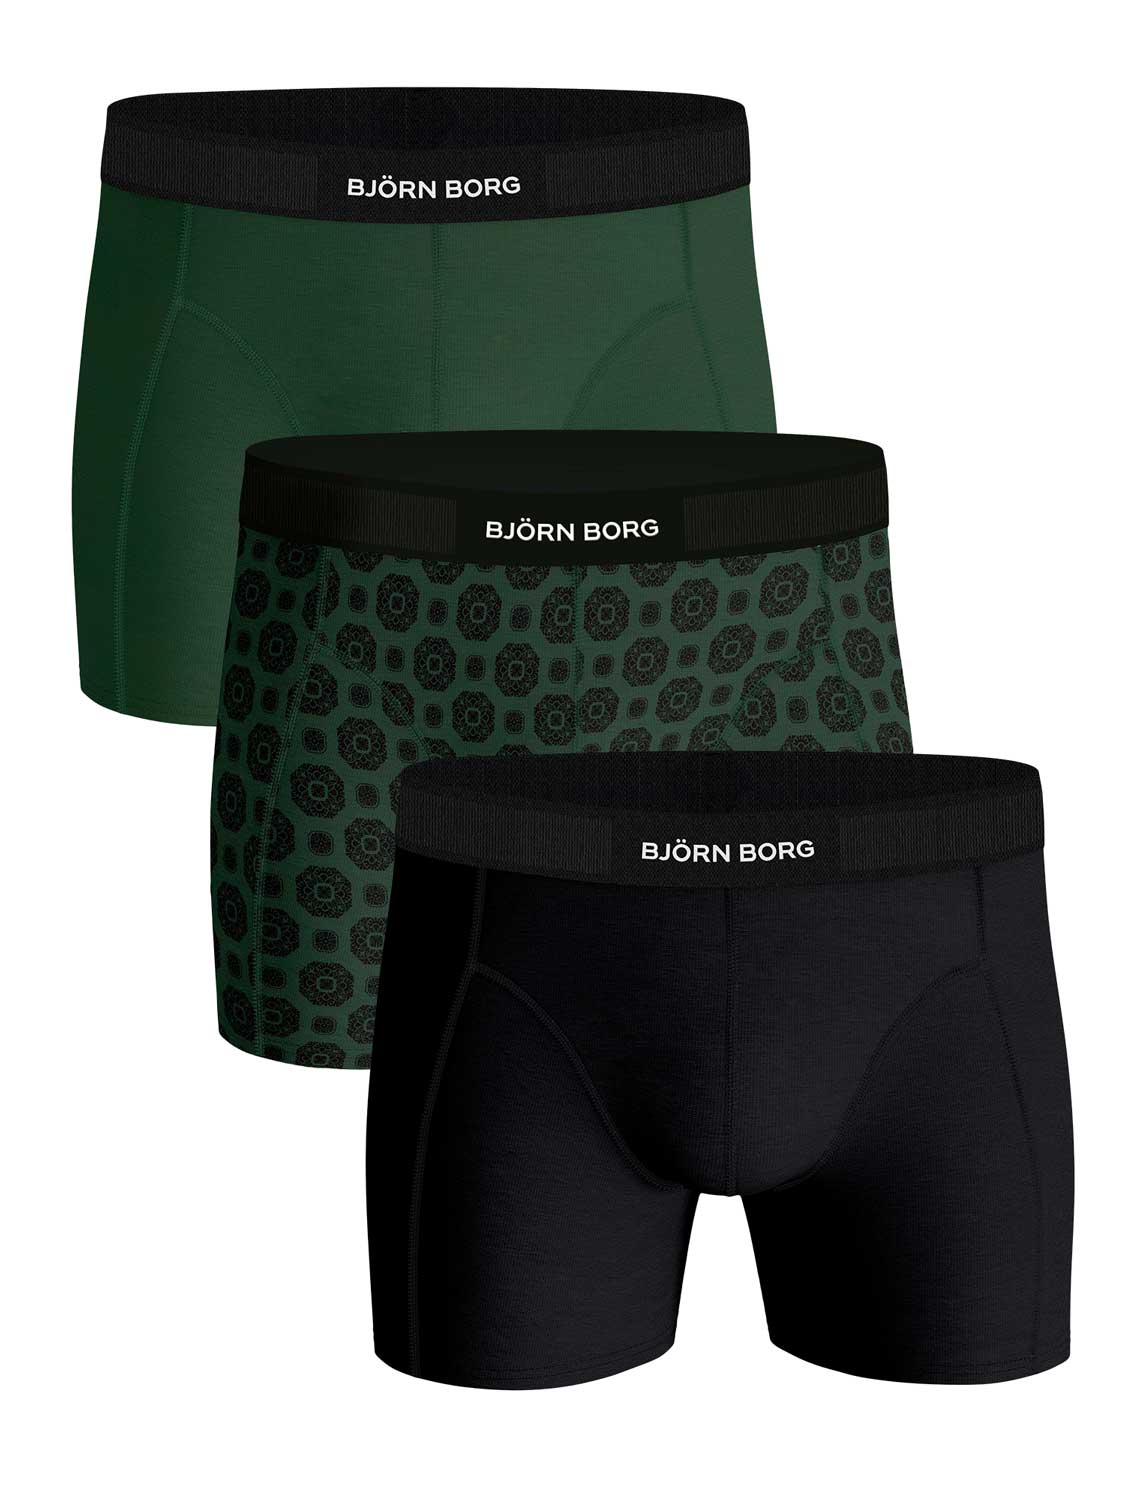 Björn Borg premium cotton stretch 3P boxers print groen & zwart - XL